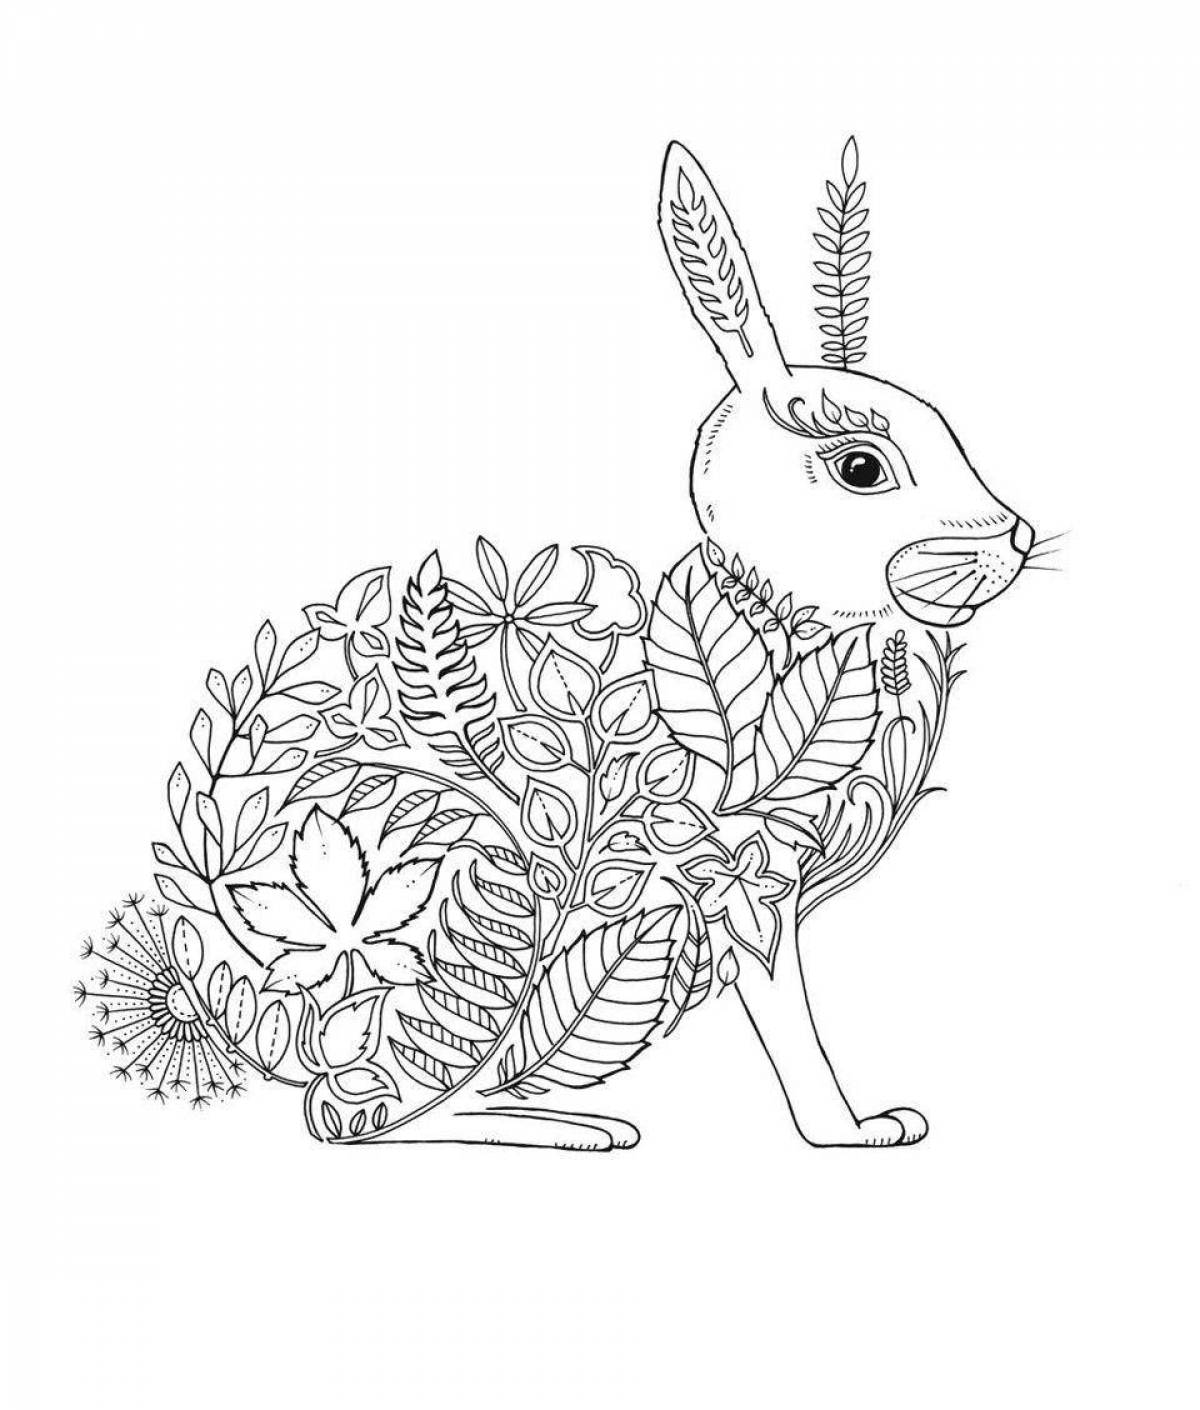 Coloring book shiny anti-stress rabbit